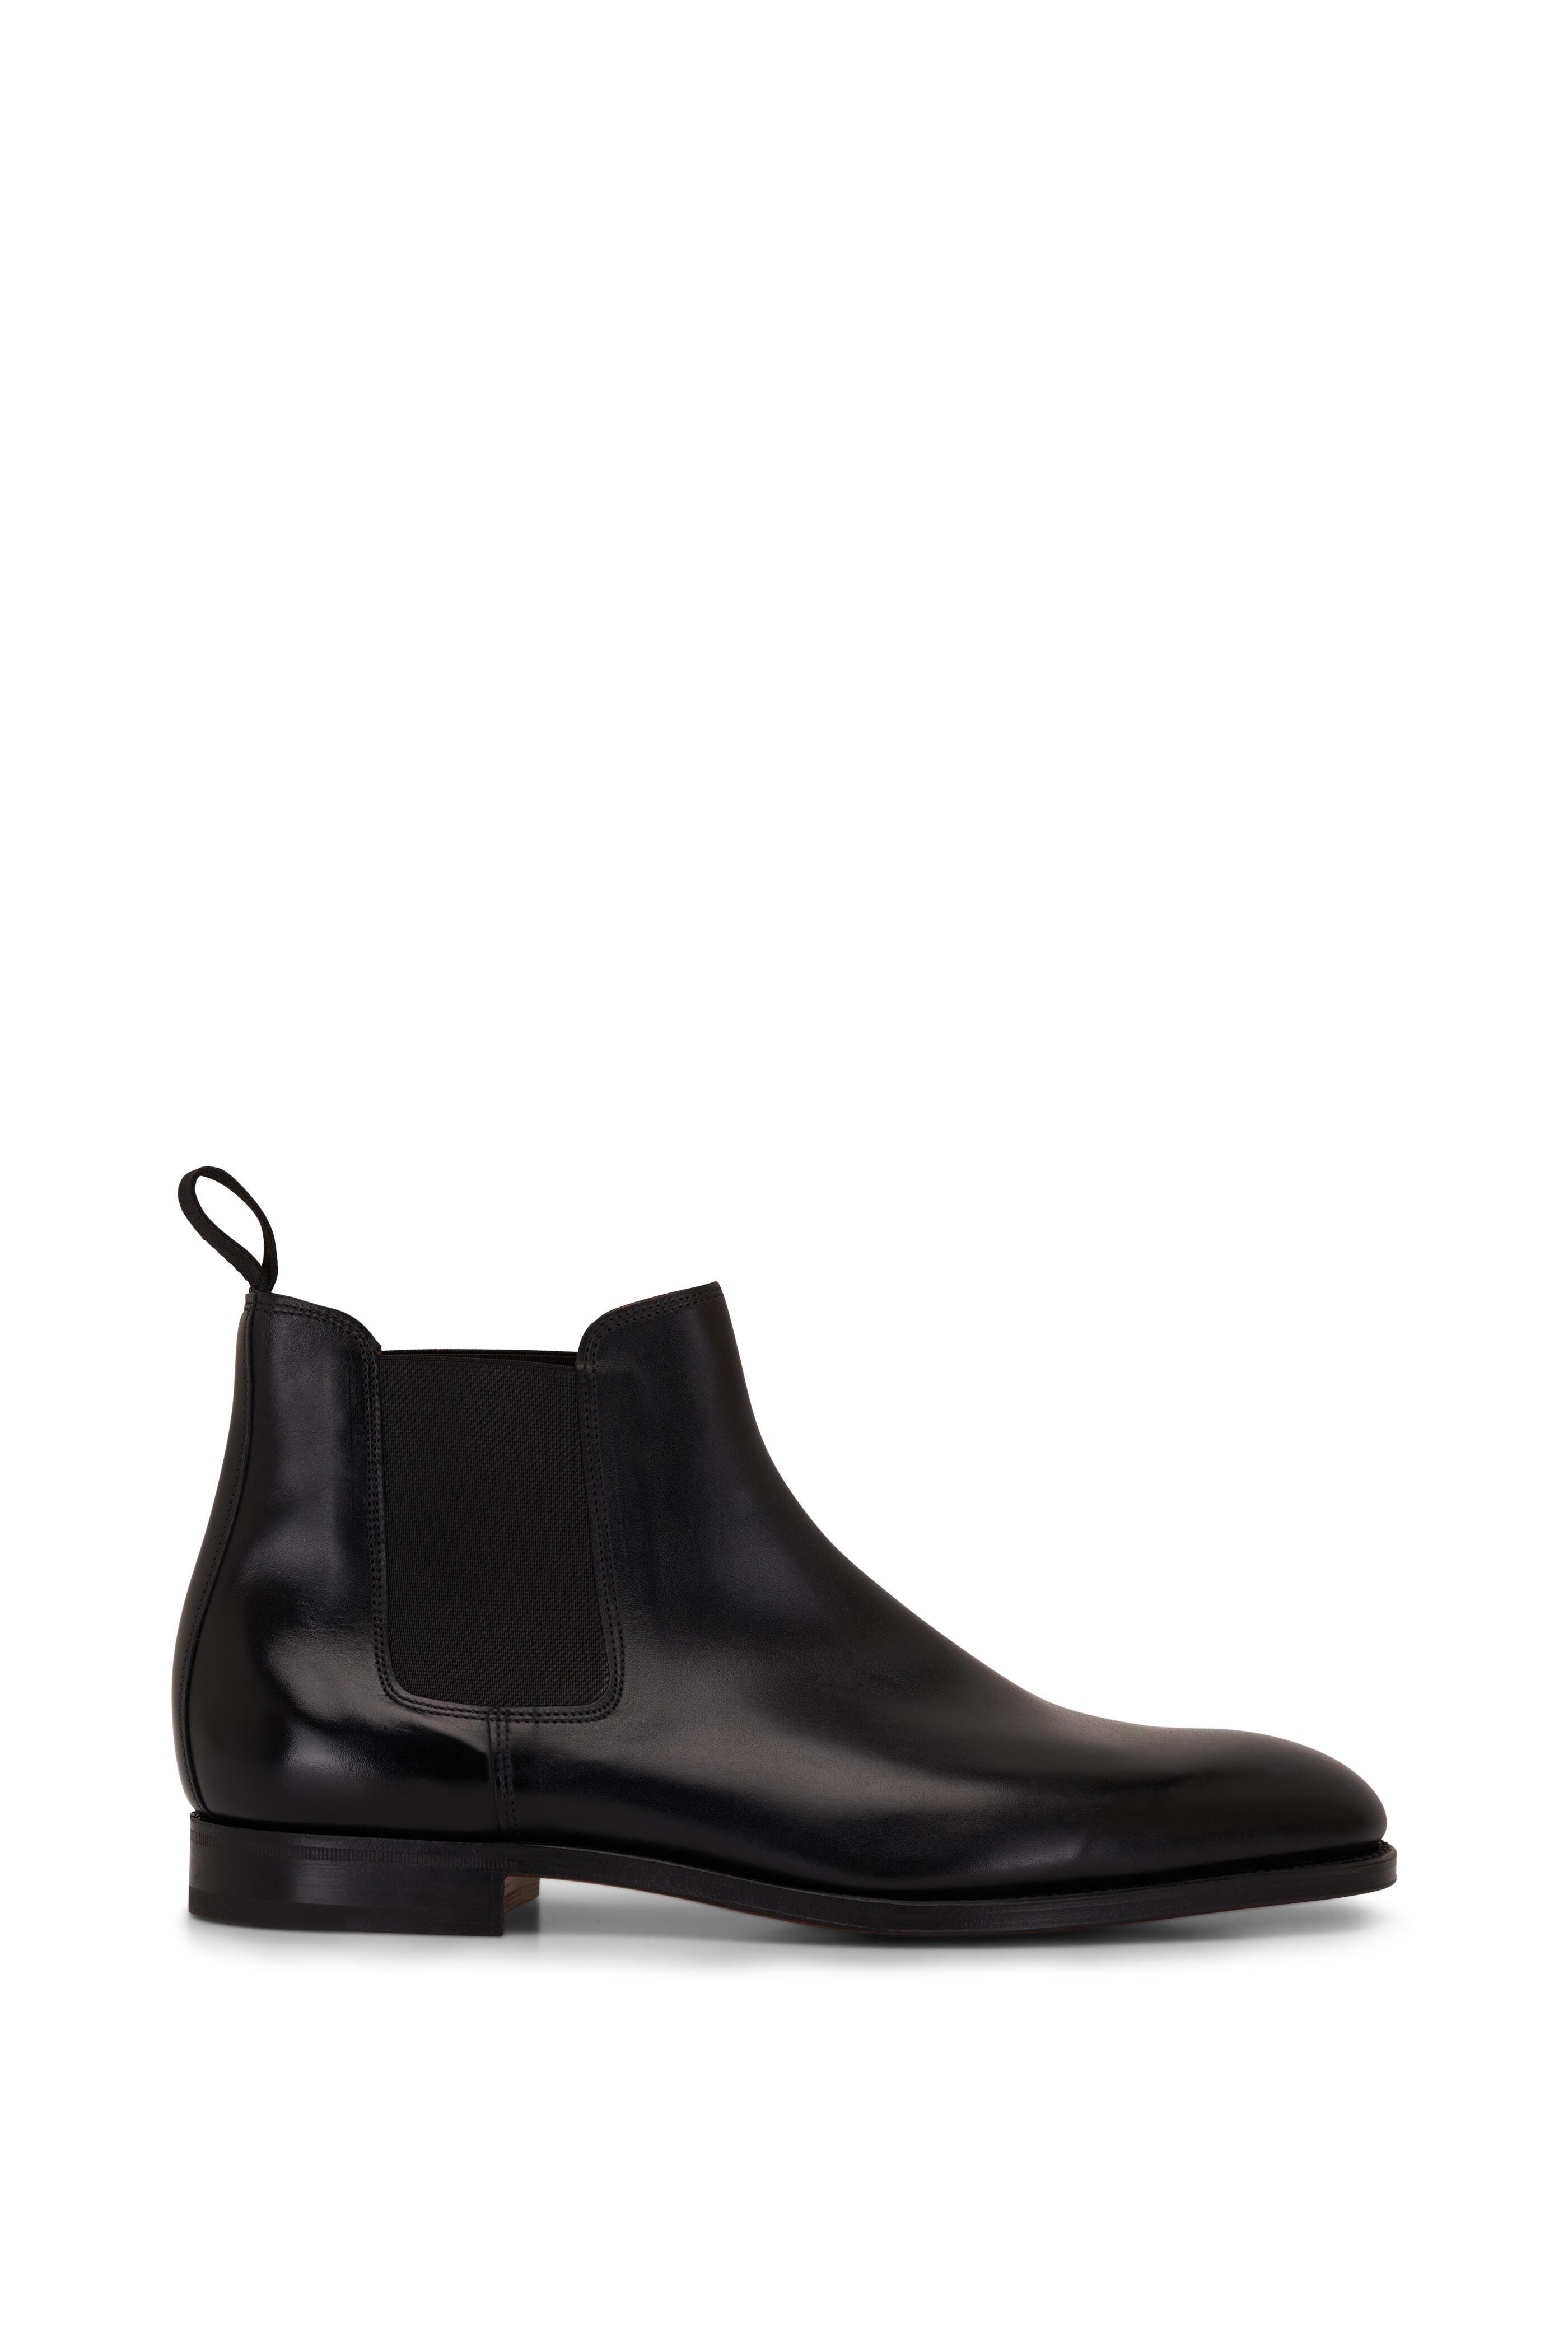 John Lobb - Black Leather Short Boot | Mitchell Stores